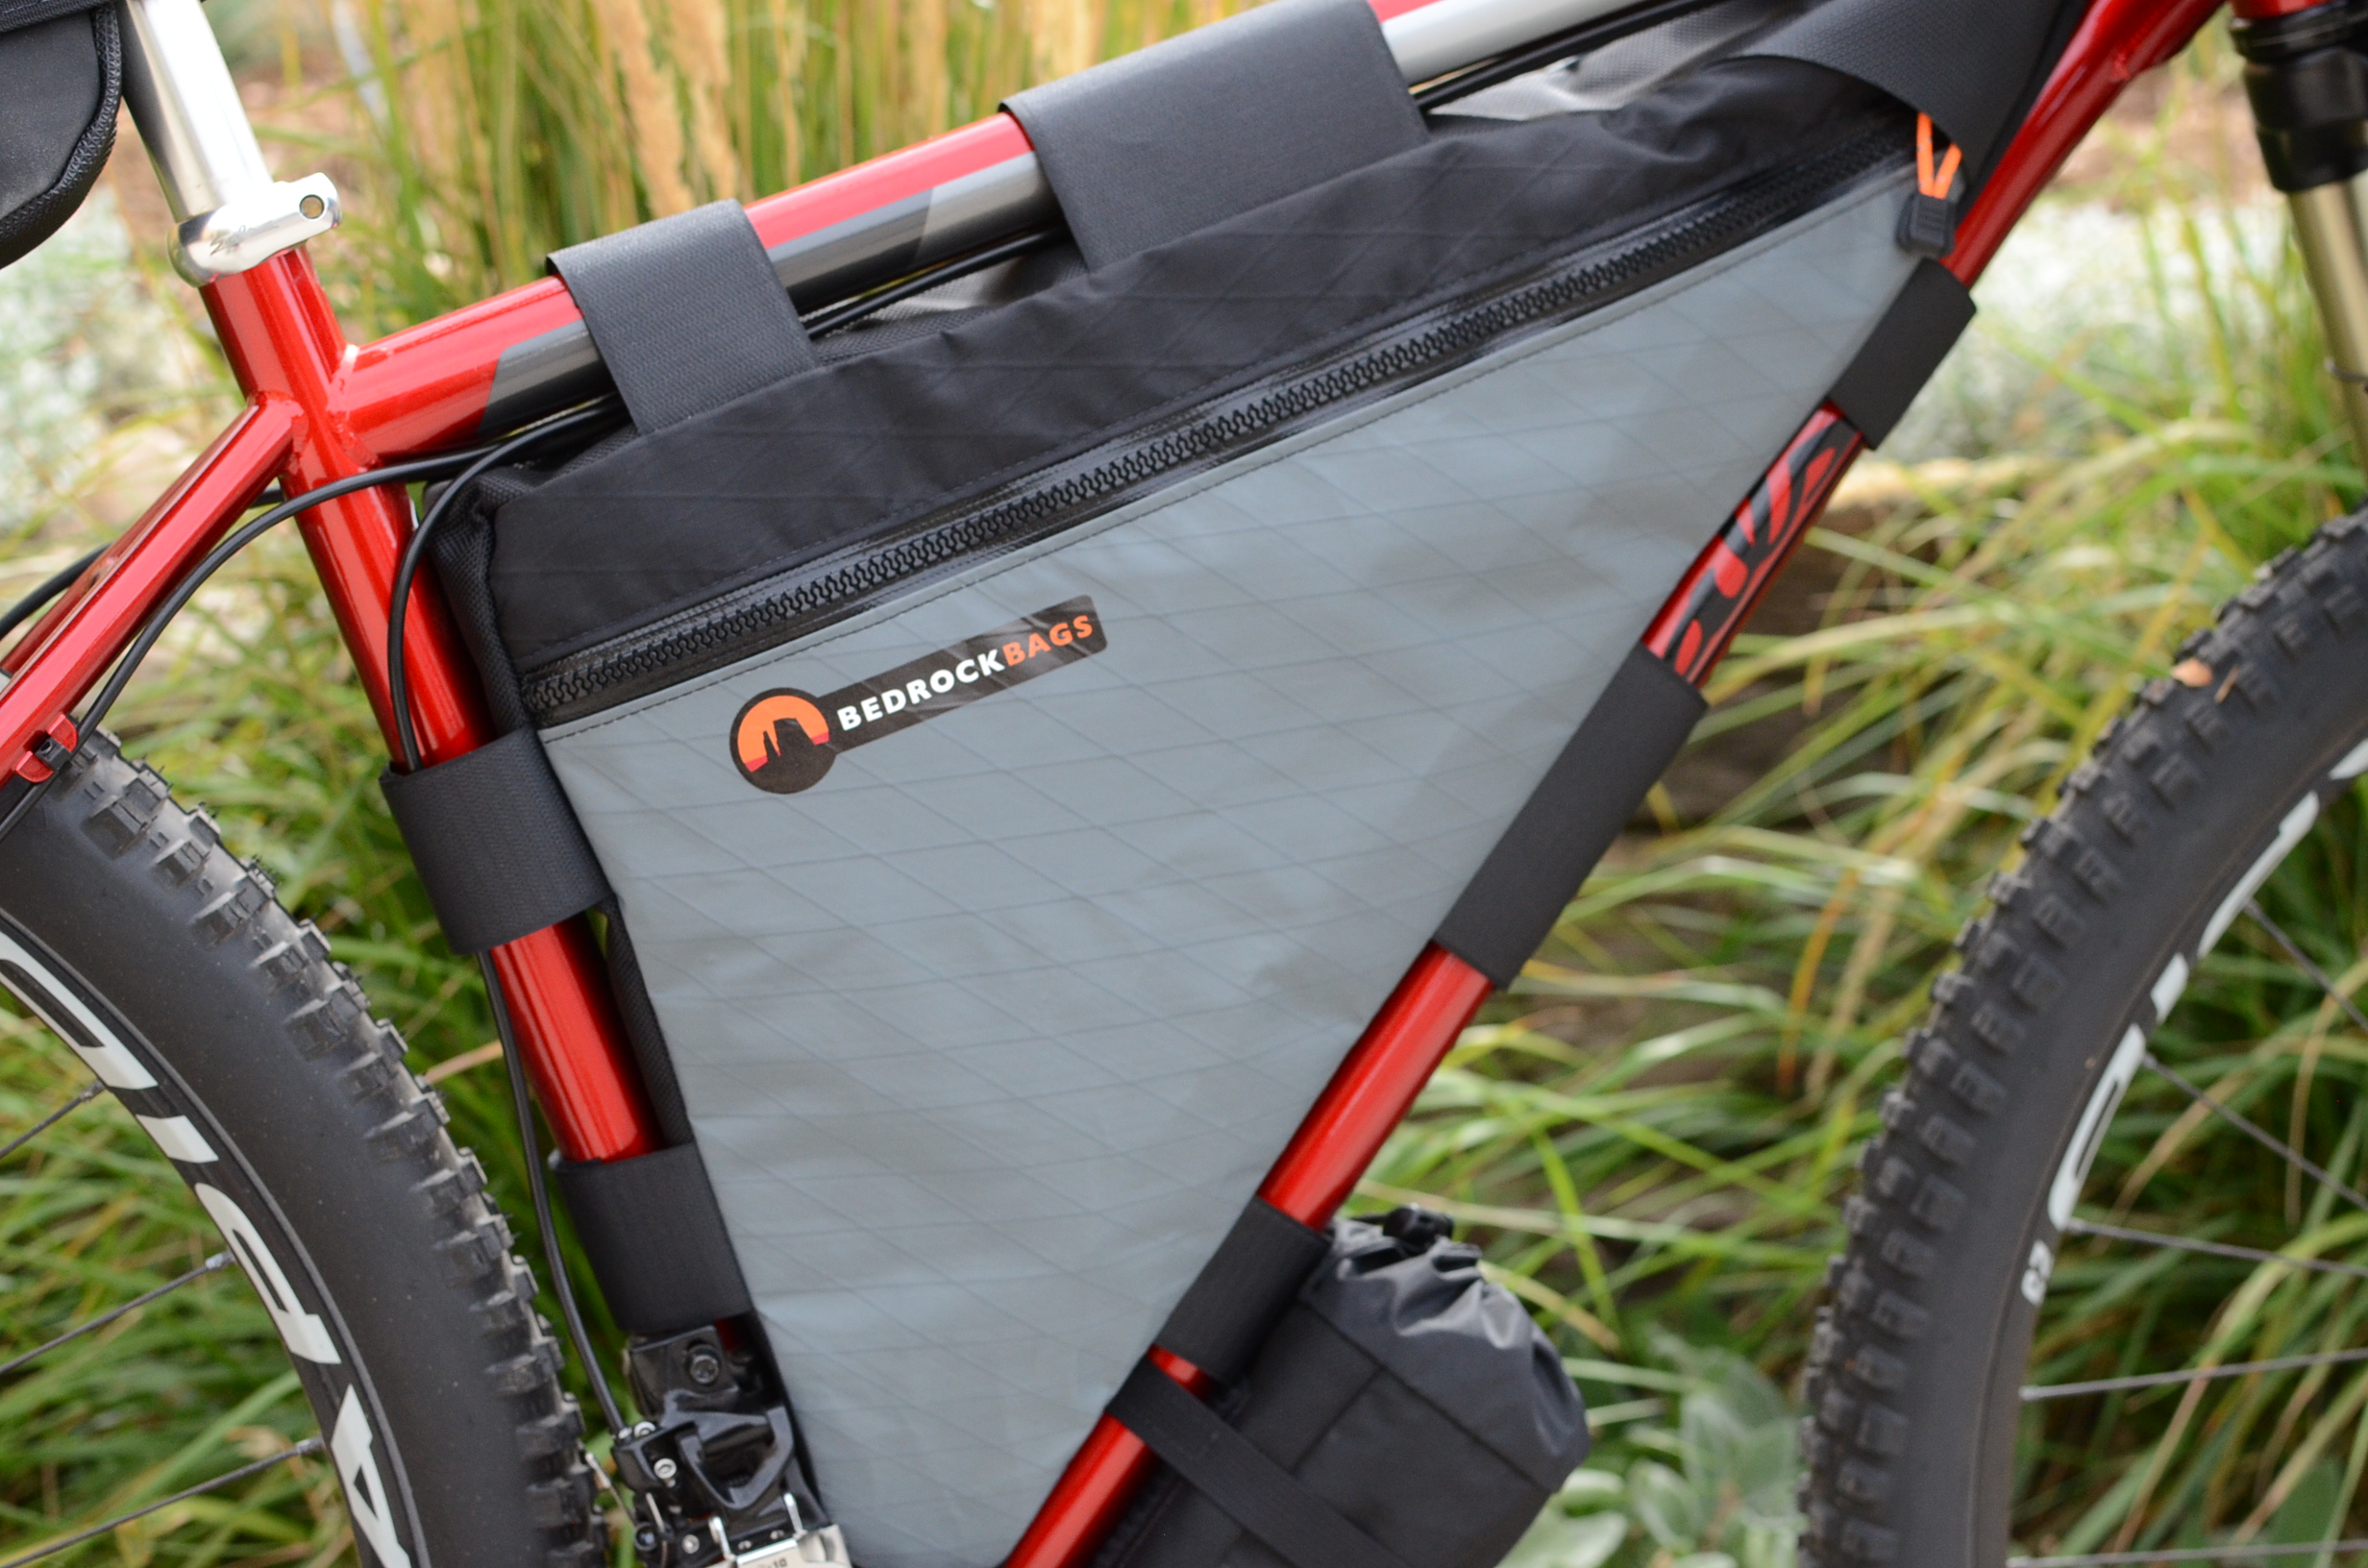 Custom Frame Bag — Bedrock Bags